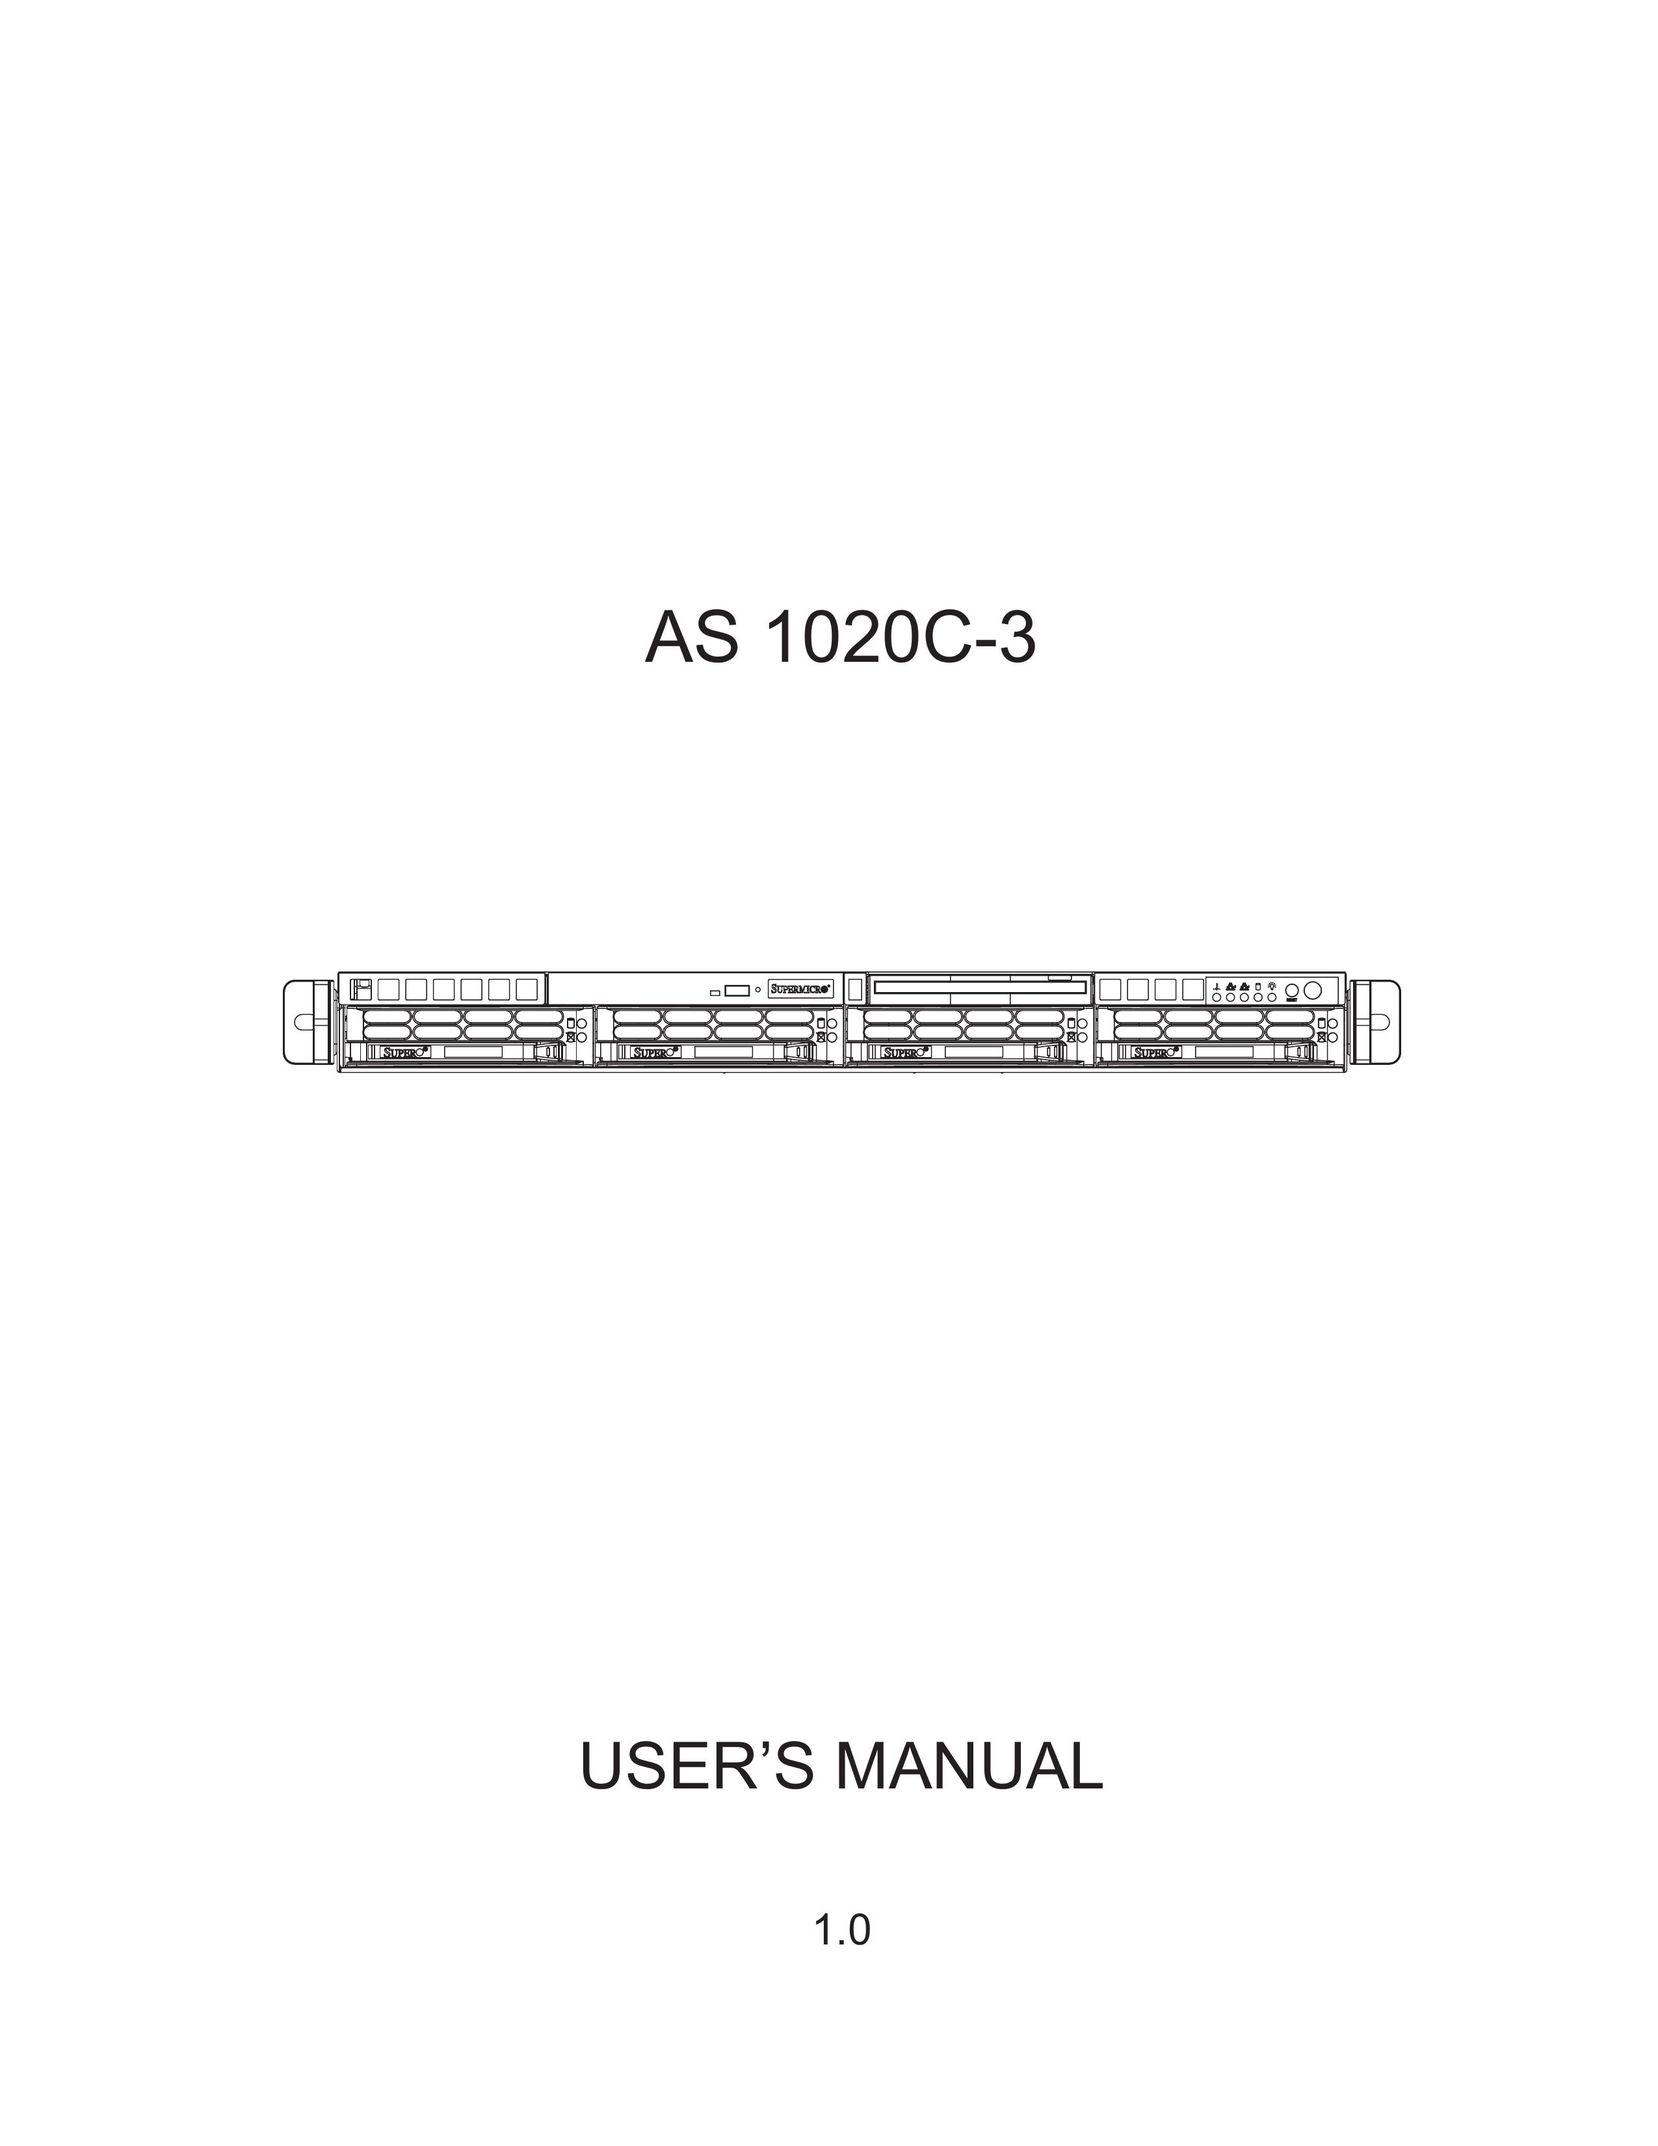 SUPER MICRO Computer AS 1020C-3 Network Card User Manual